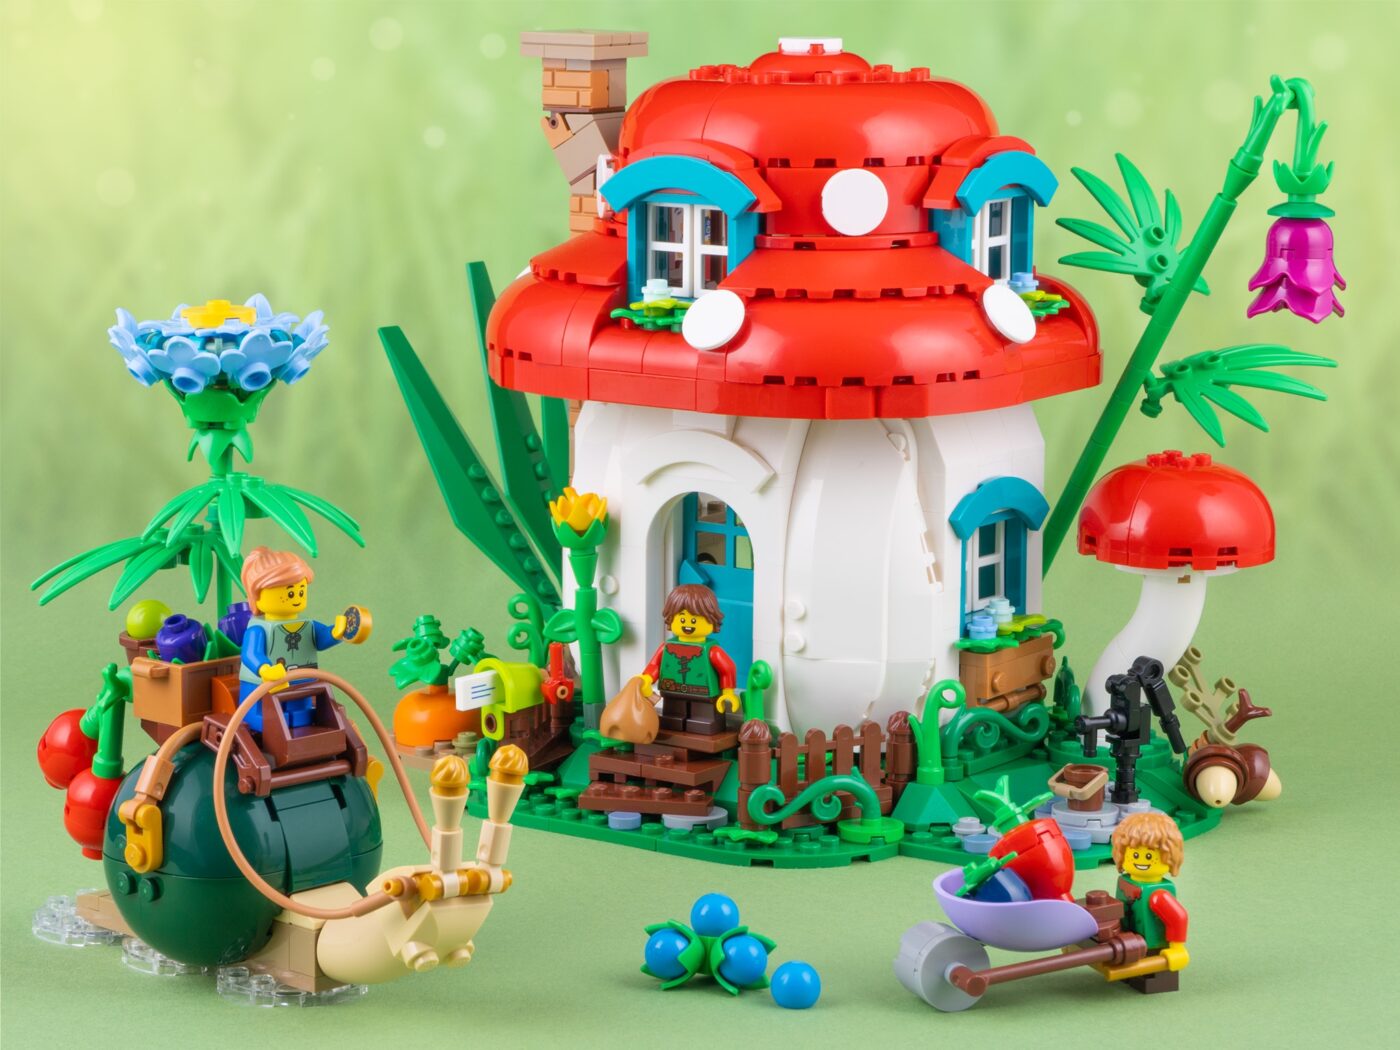 LEGO Bricklink Designer Program Series 2 Mushroom House